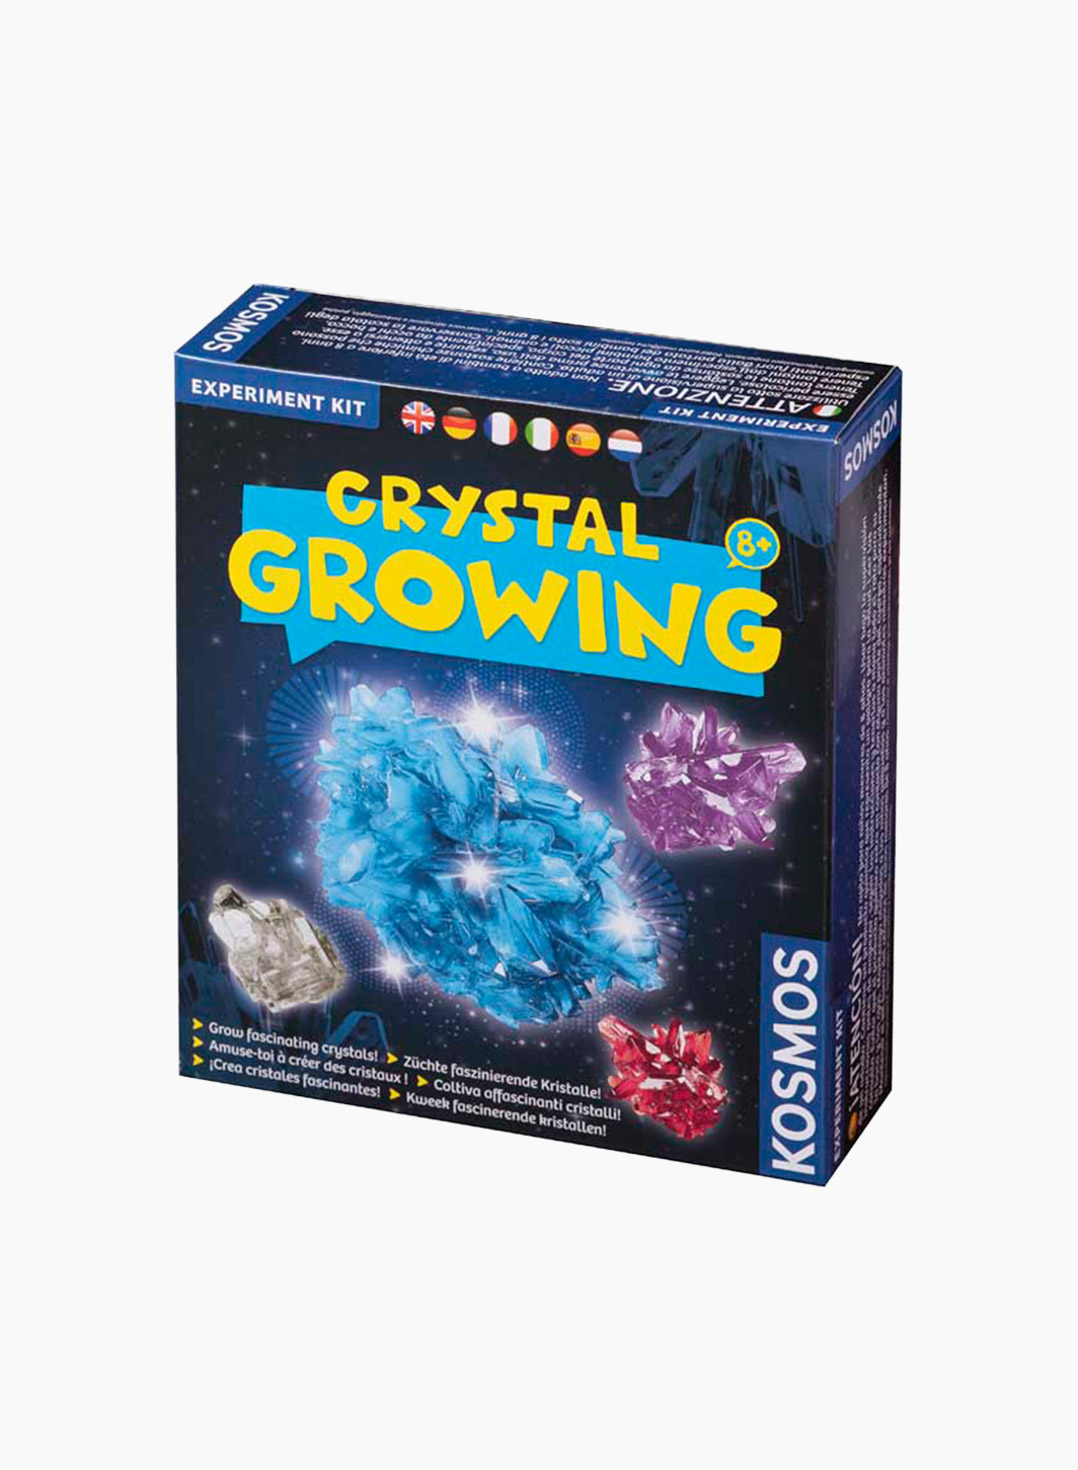 THAMES & KOSMOS Educational Game Crystal Growing